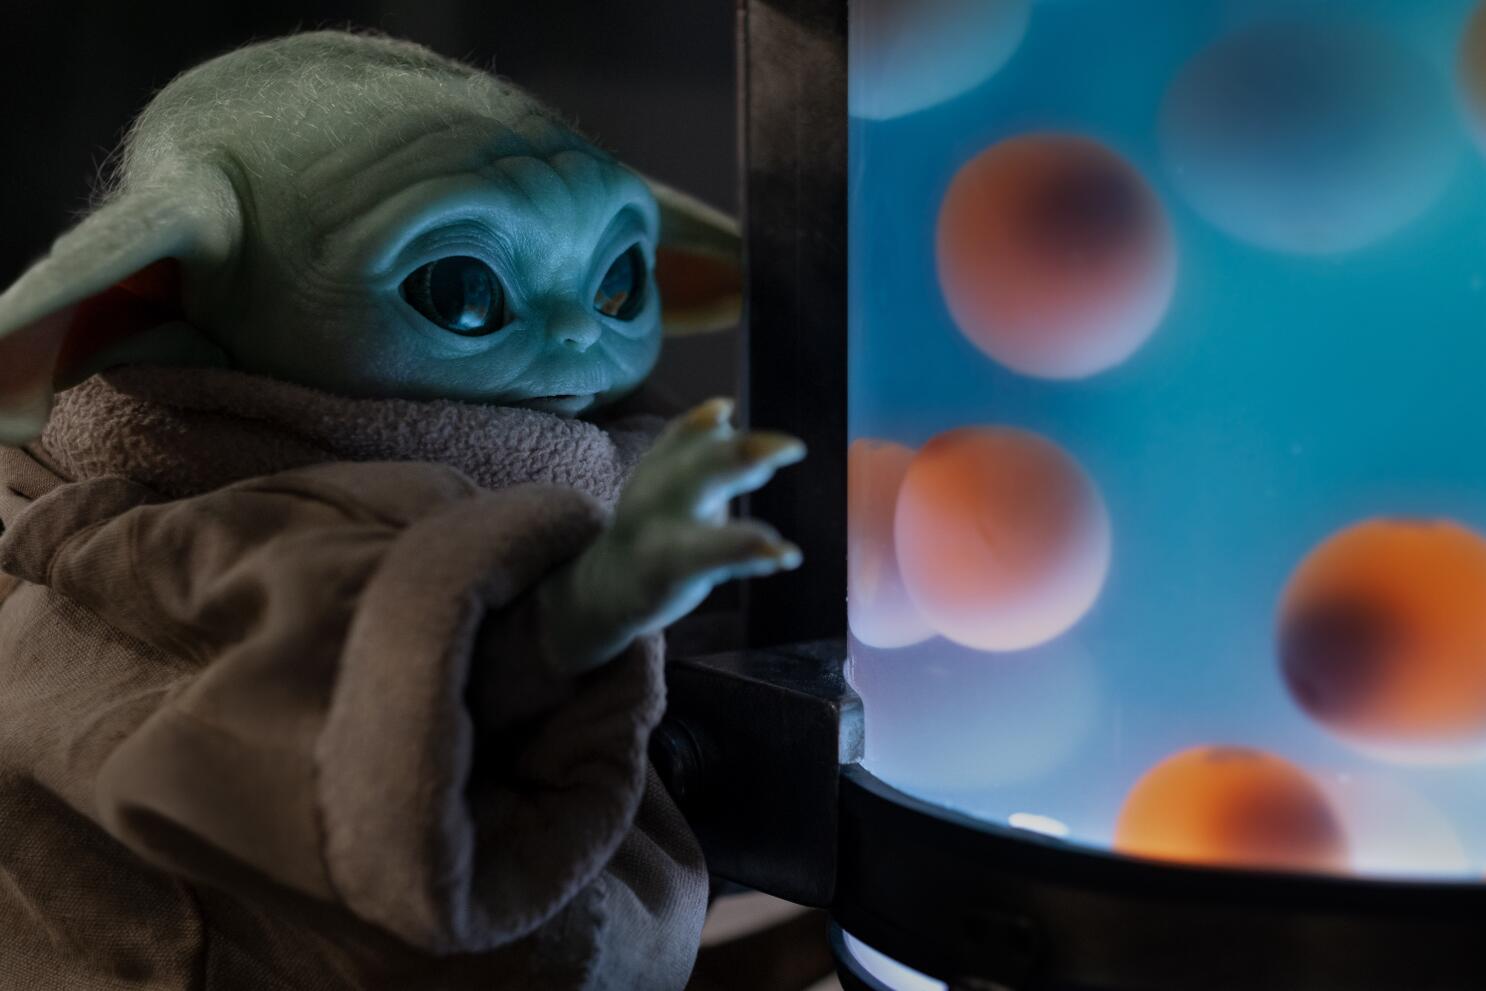 Baby Yoda is Grogu  The Mandalorian's Child has real name